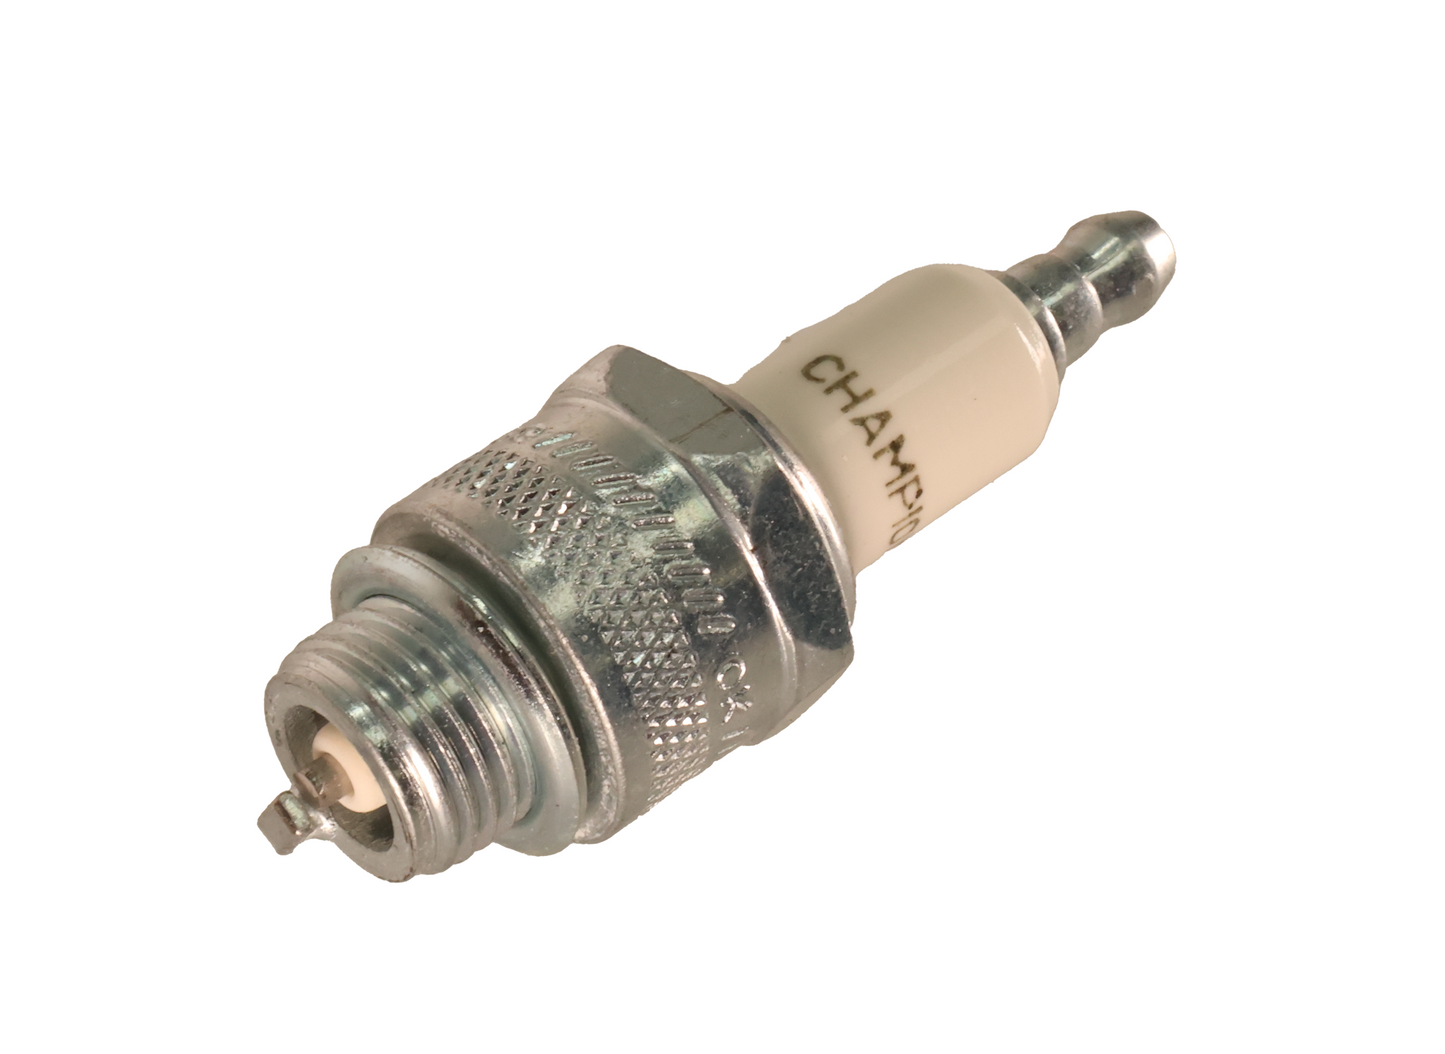 John Deere Original Equipment Spark Plug - TY26715